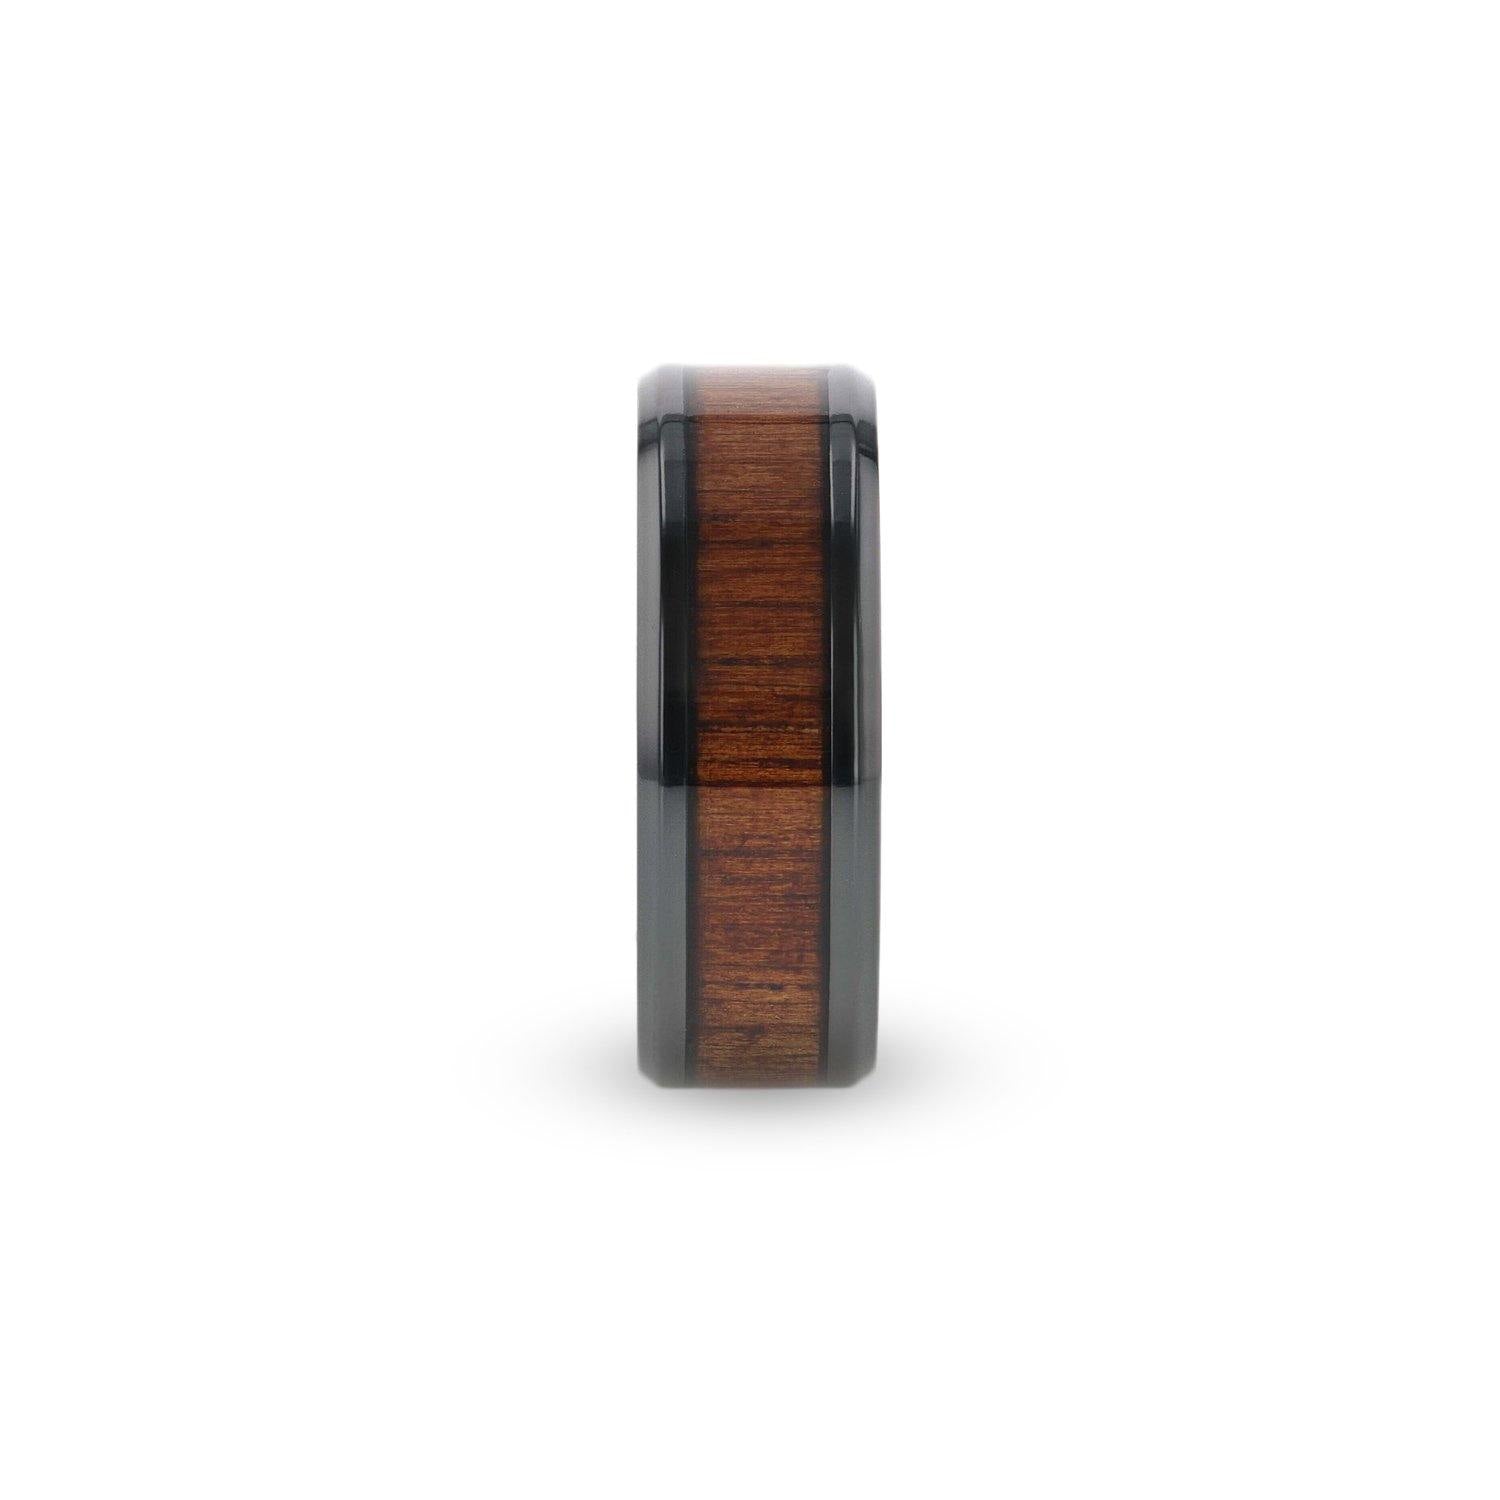 LEIFI - Koa Wood Inlaid Black Titanium Ring with Bevels - 8 mm - The Rutile Ltd